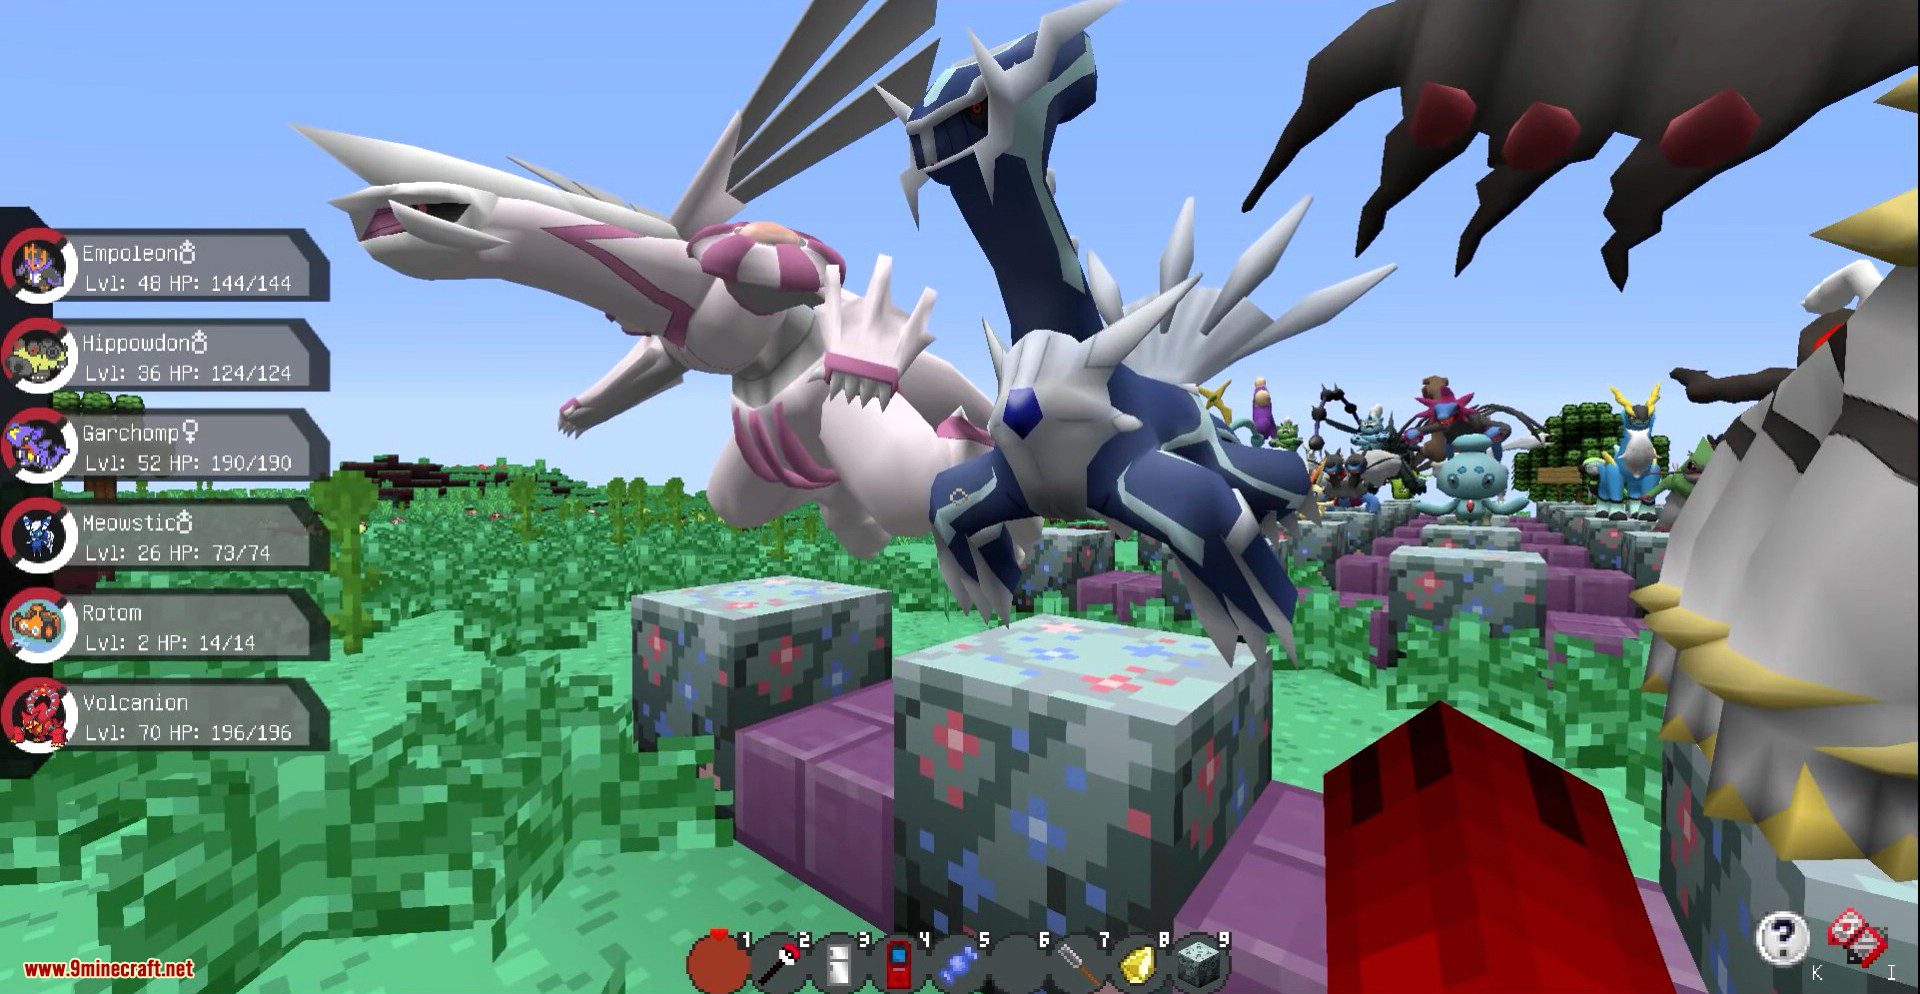 Pixelmon Mod (1.16.5, 1.12.2) - Pixelmon Reforged, Pokémon inside Minecraft 19